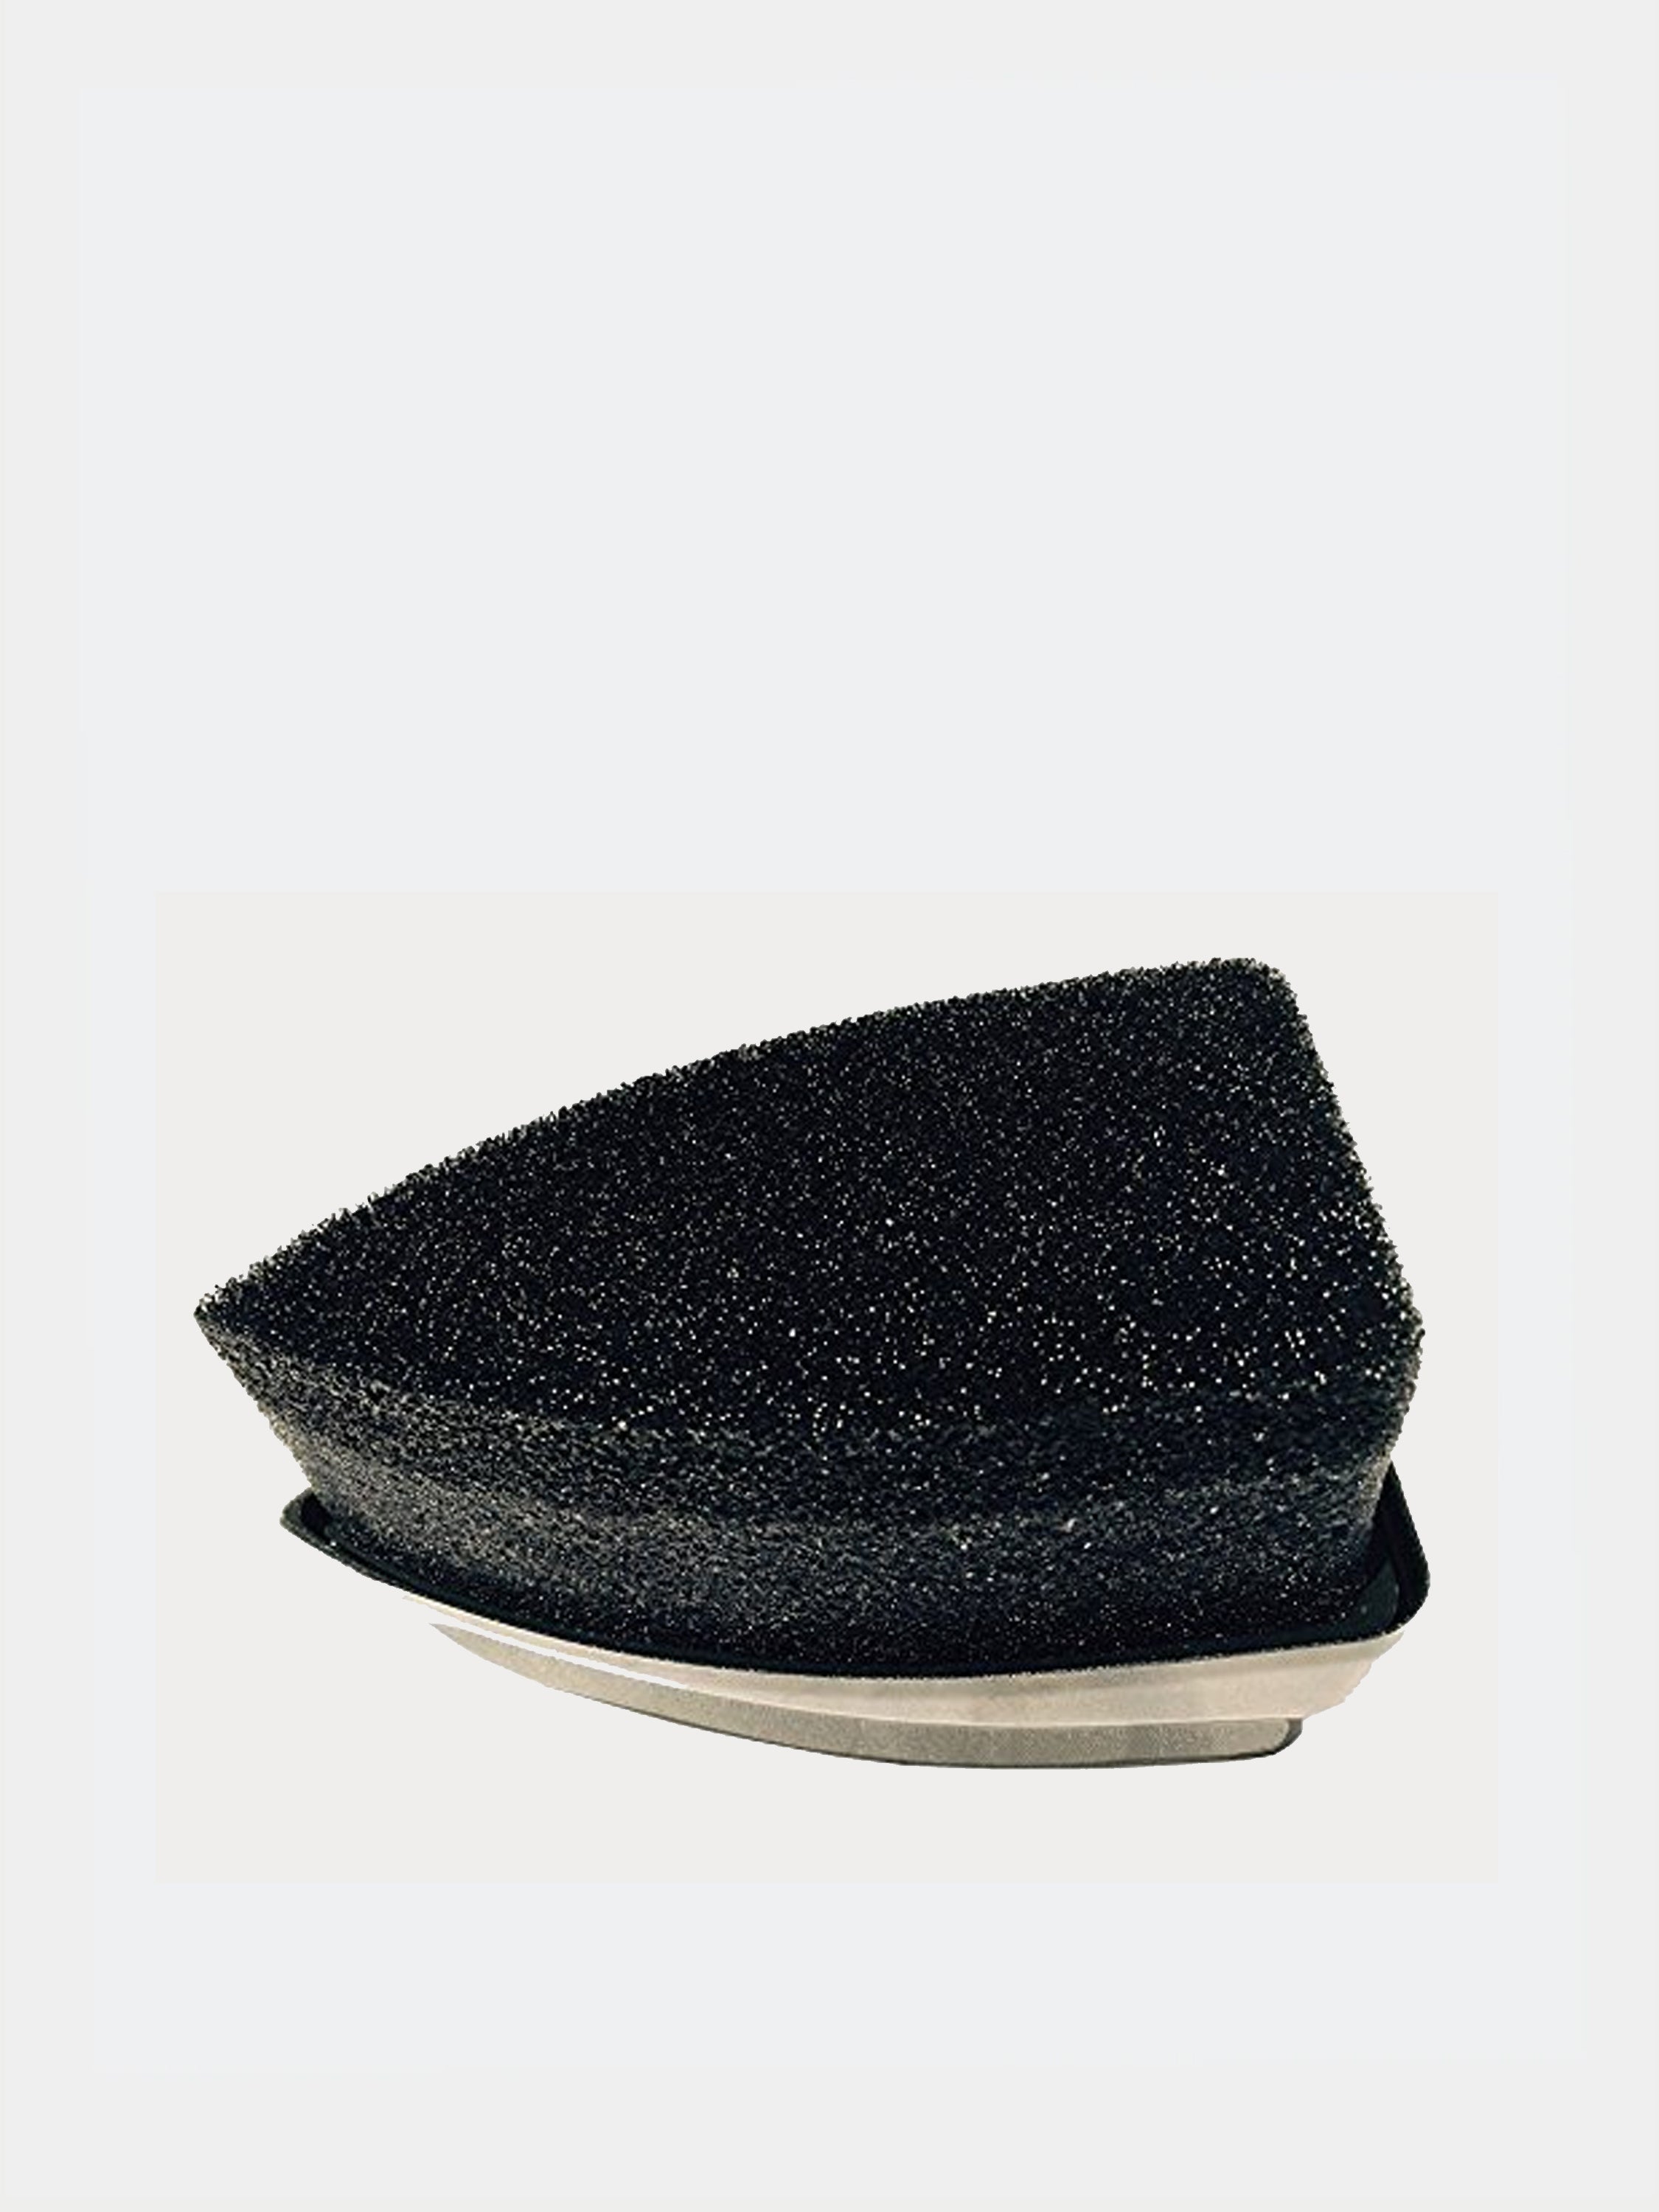 Woly Black Shoe Shine Sponge